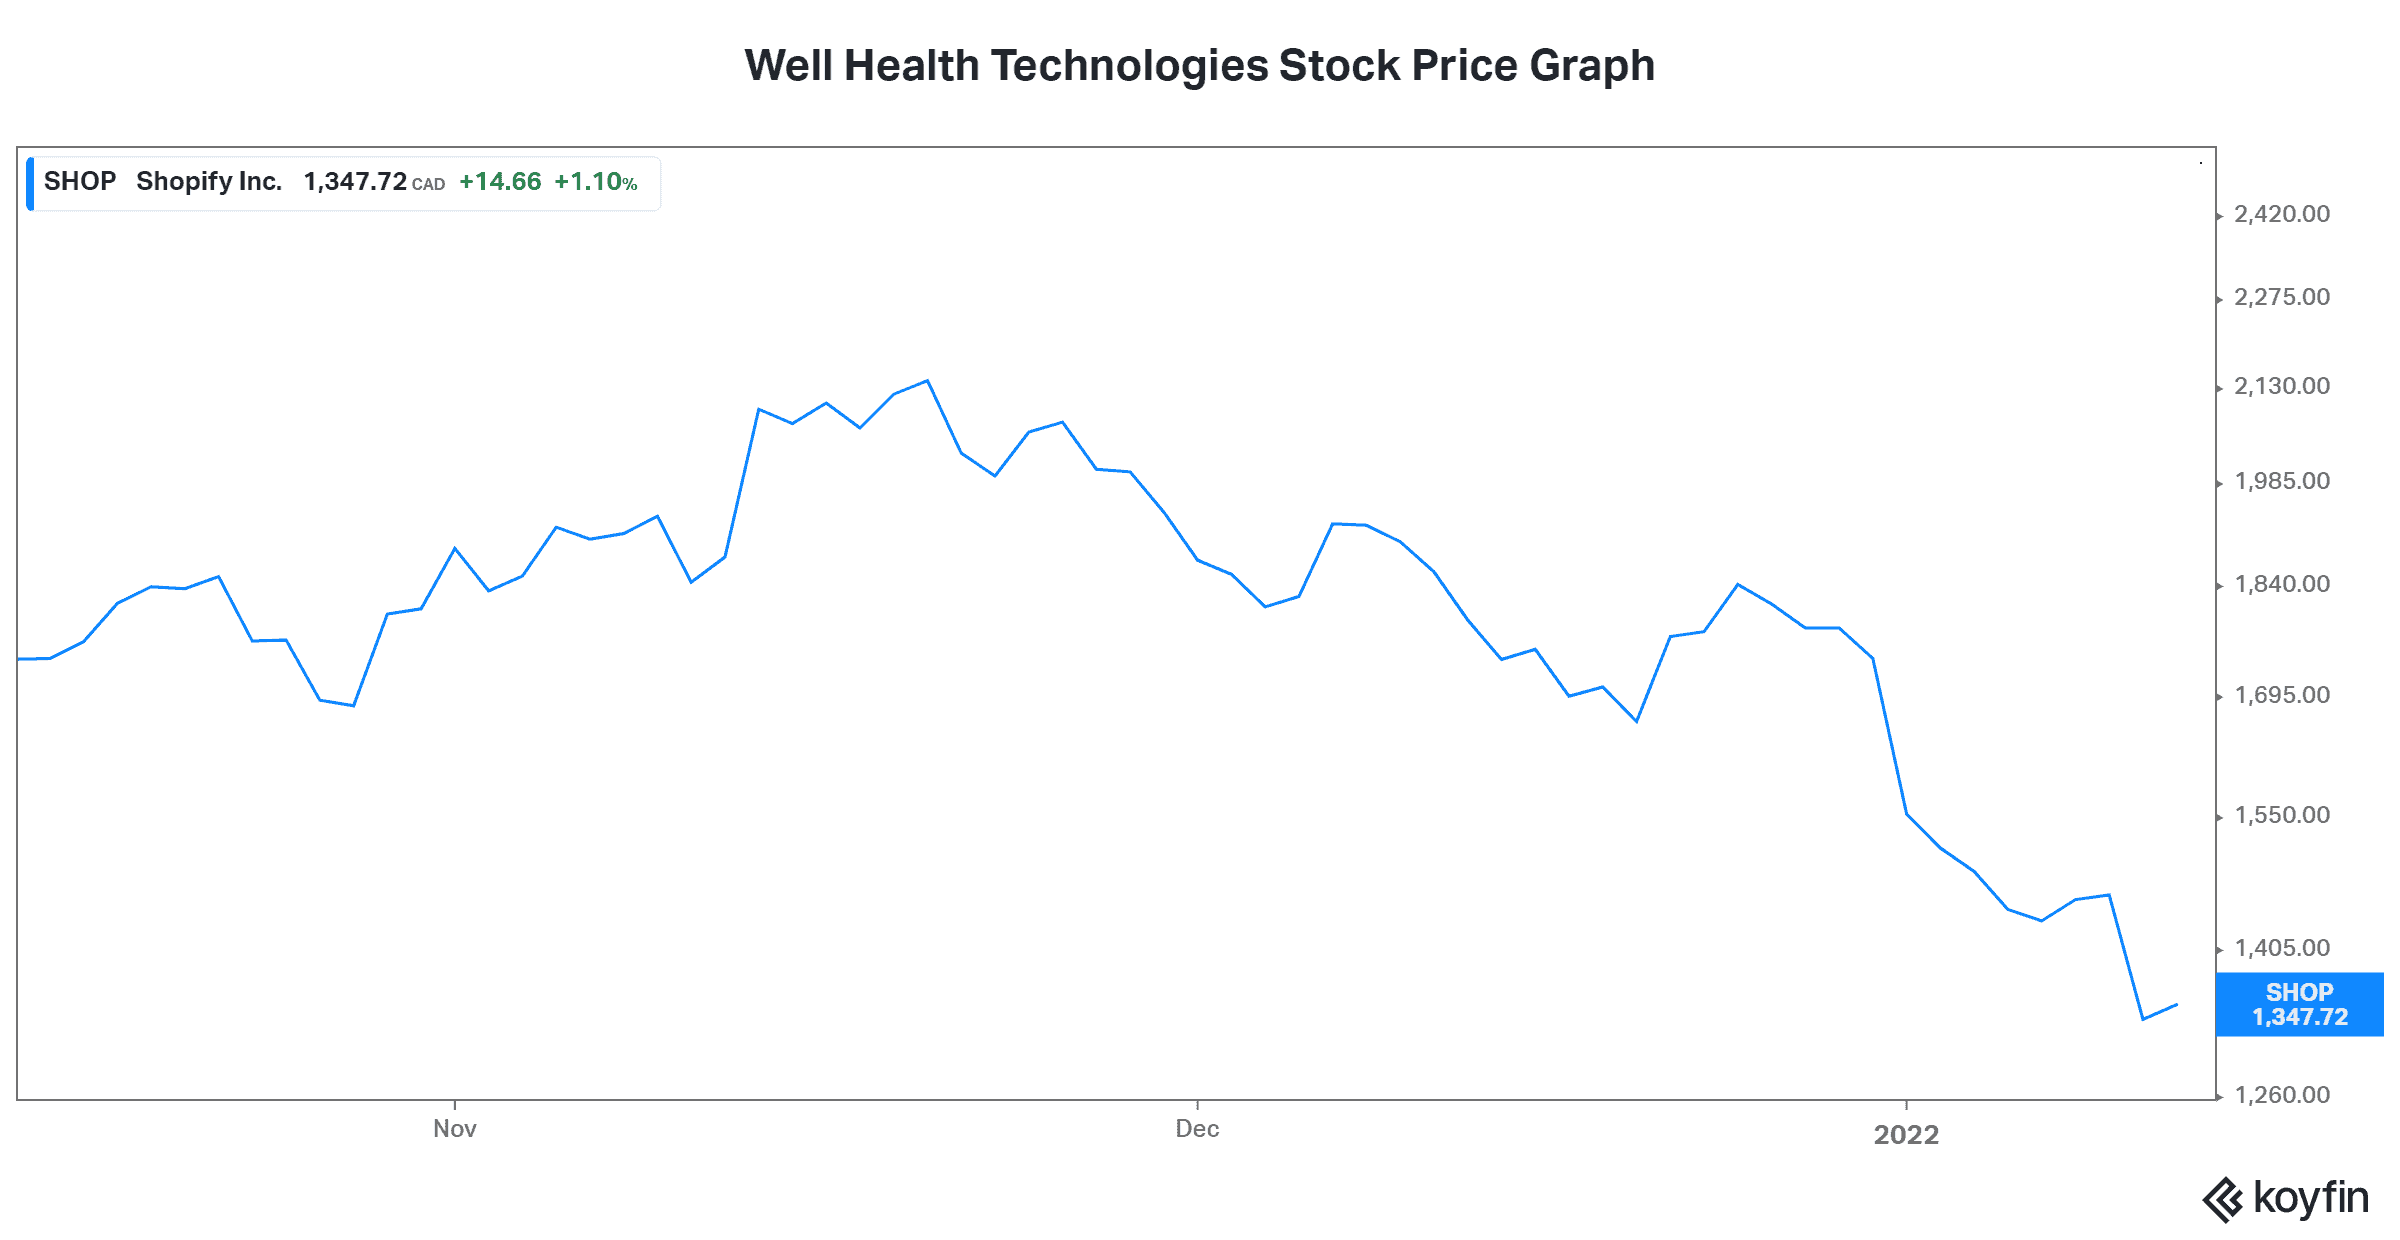 Well Health Technologies stock